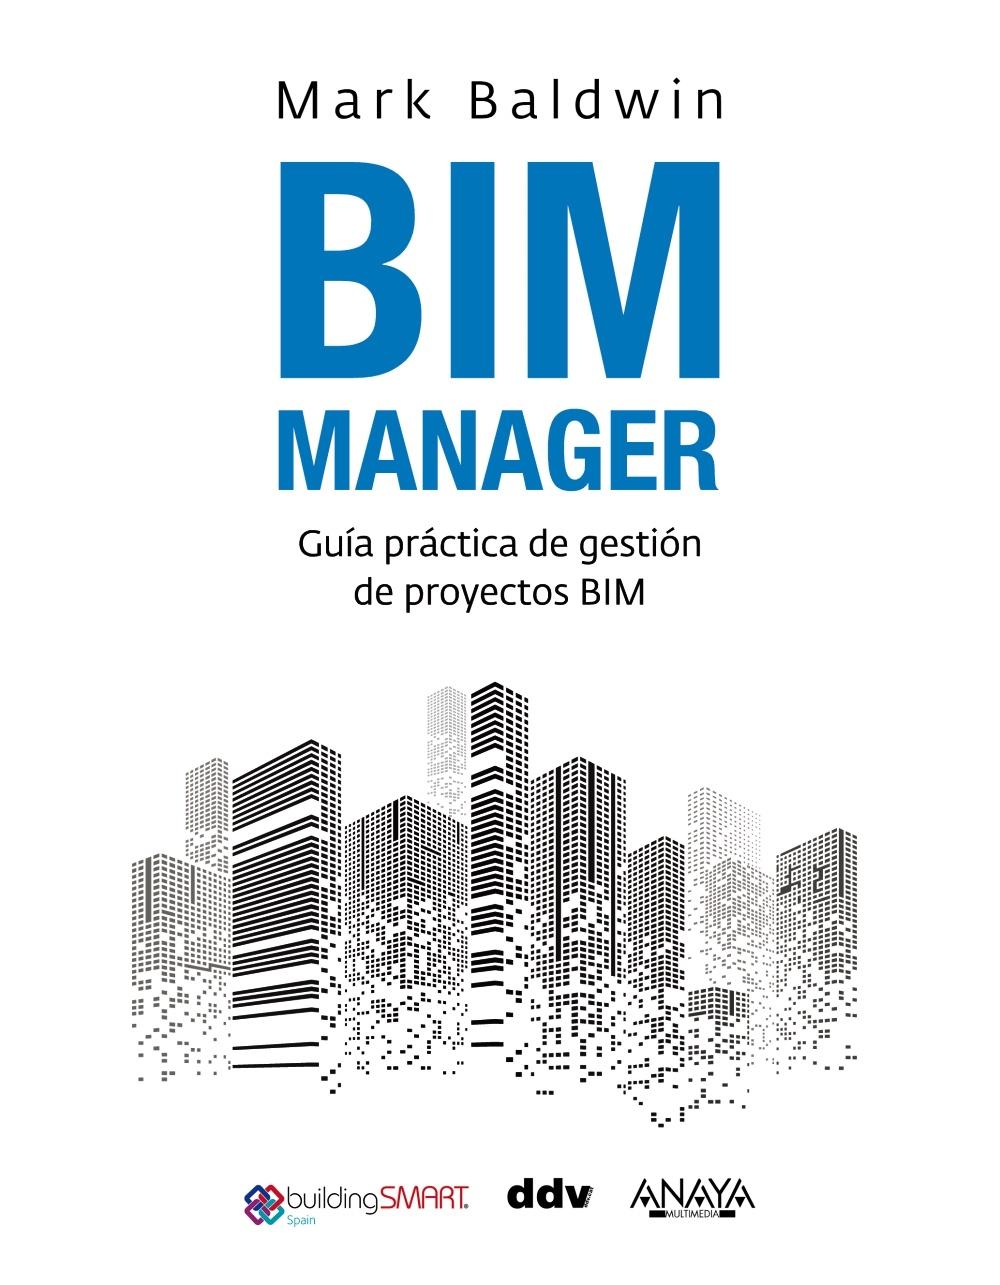 BIM MANAGER "GUIA PRACTICA DE GESTION DE PROYECTOS BIM"